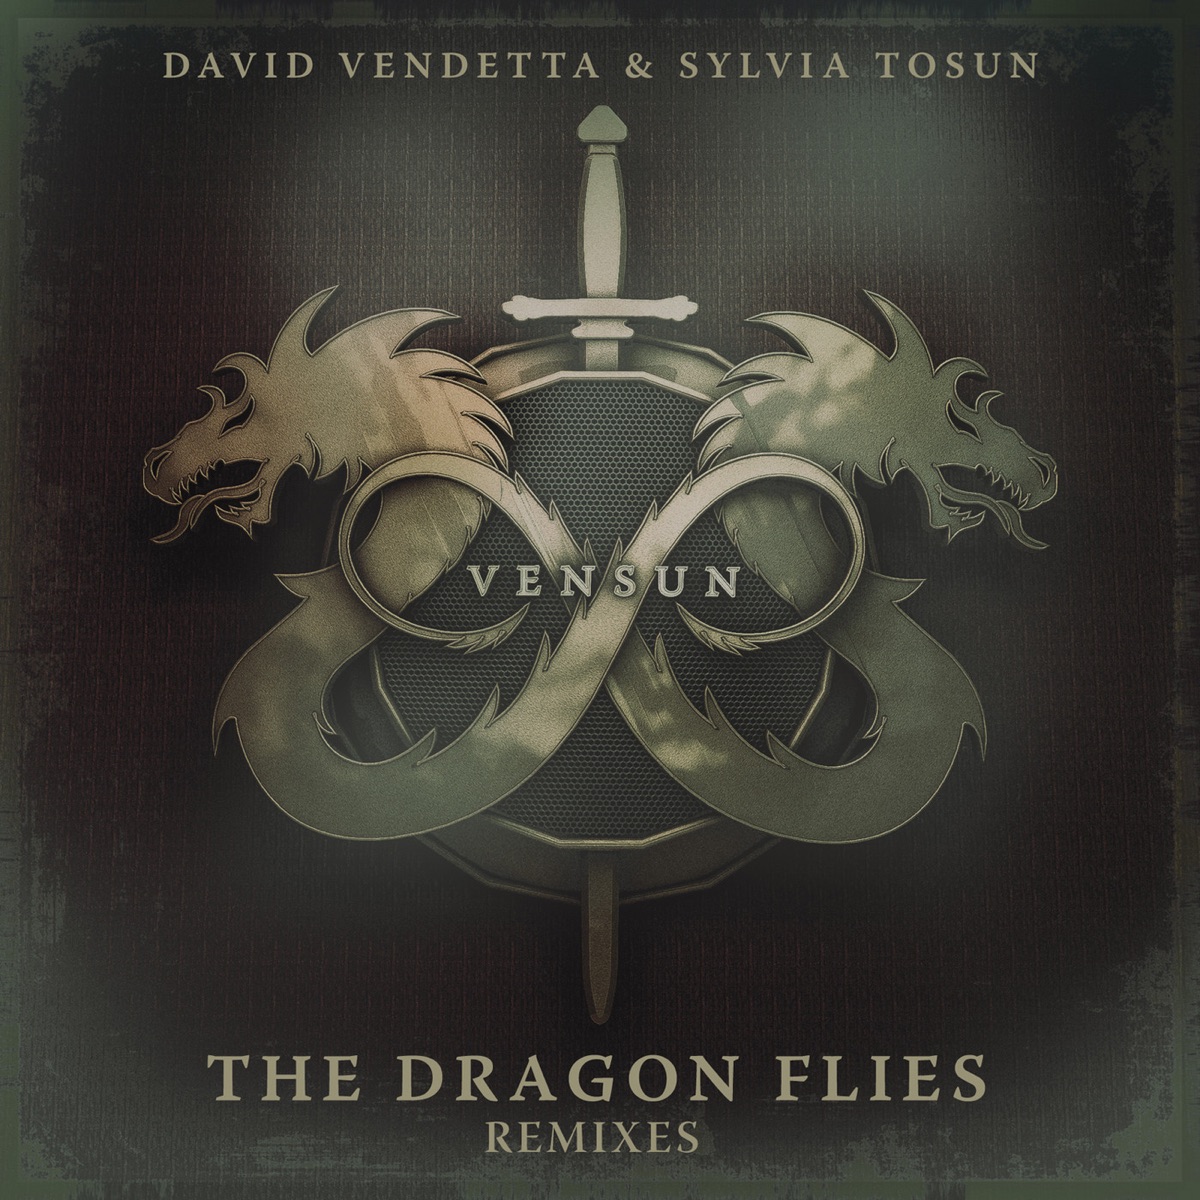 VenSun, David Vendetta, & Sylvia Tosun — The Dragon Flies cover artwork